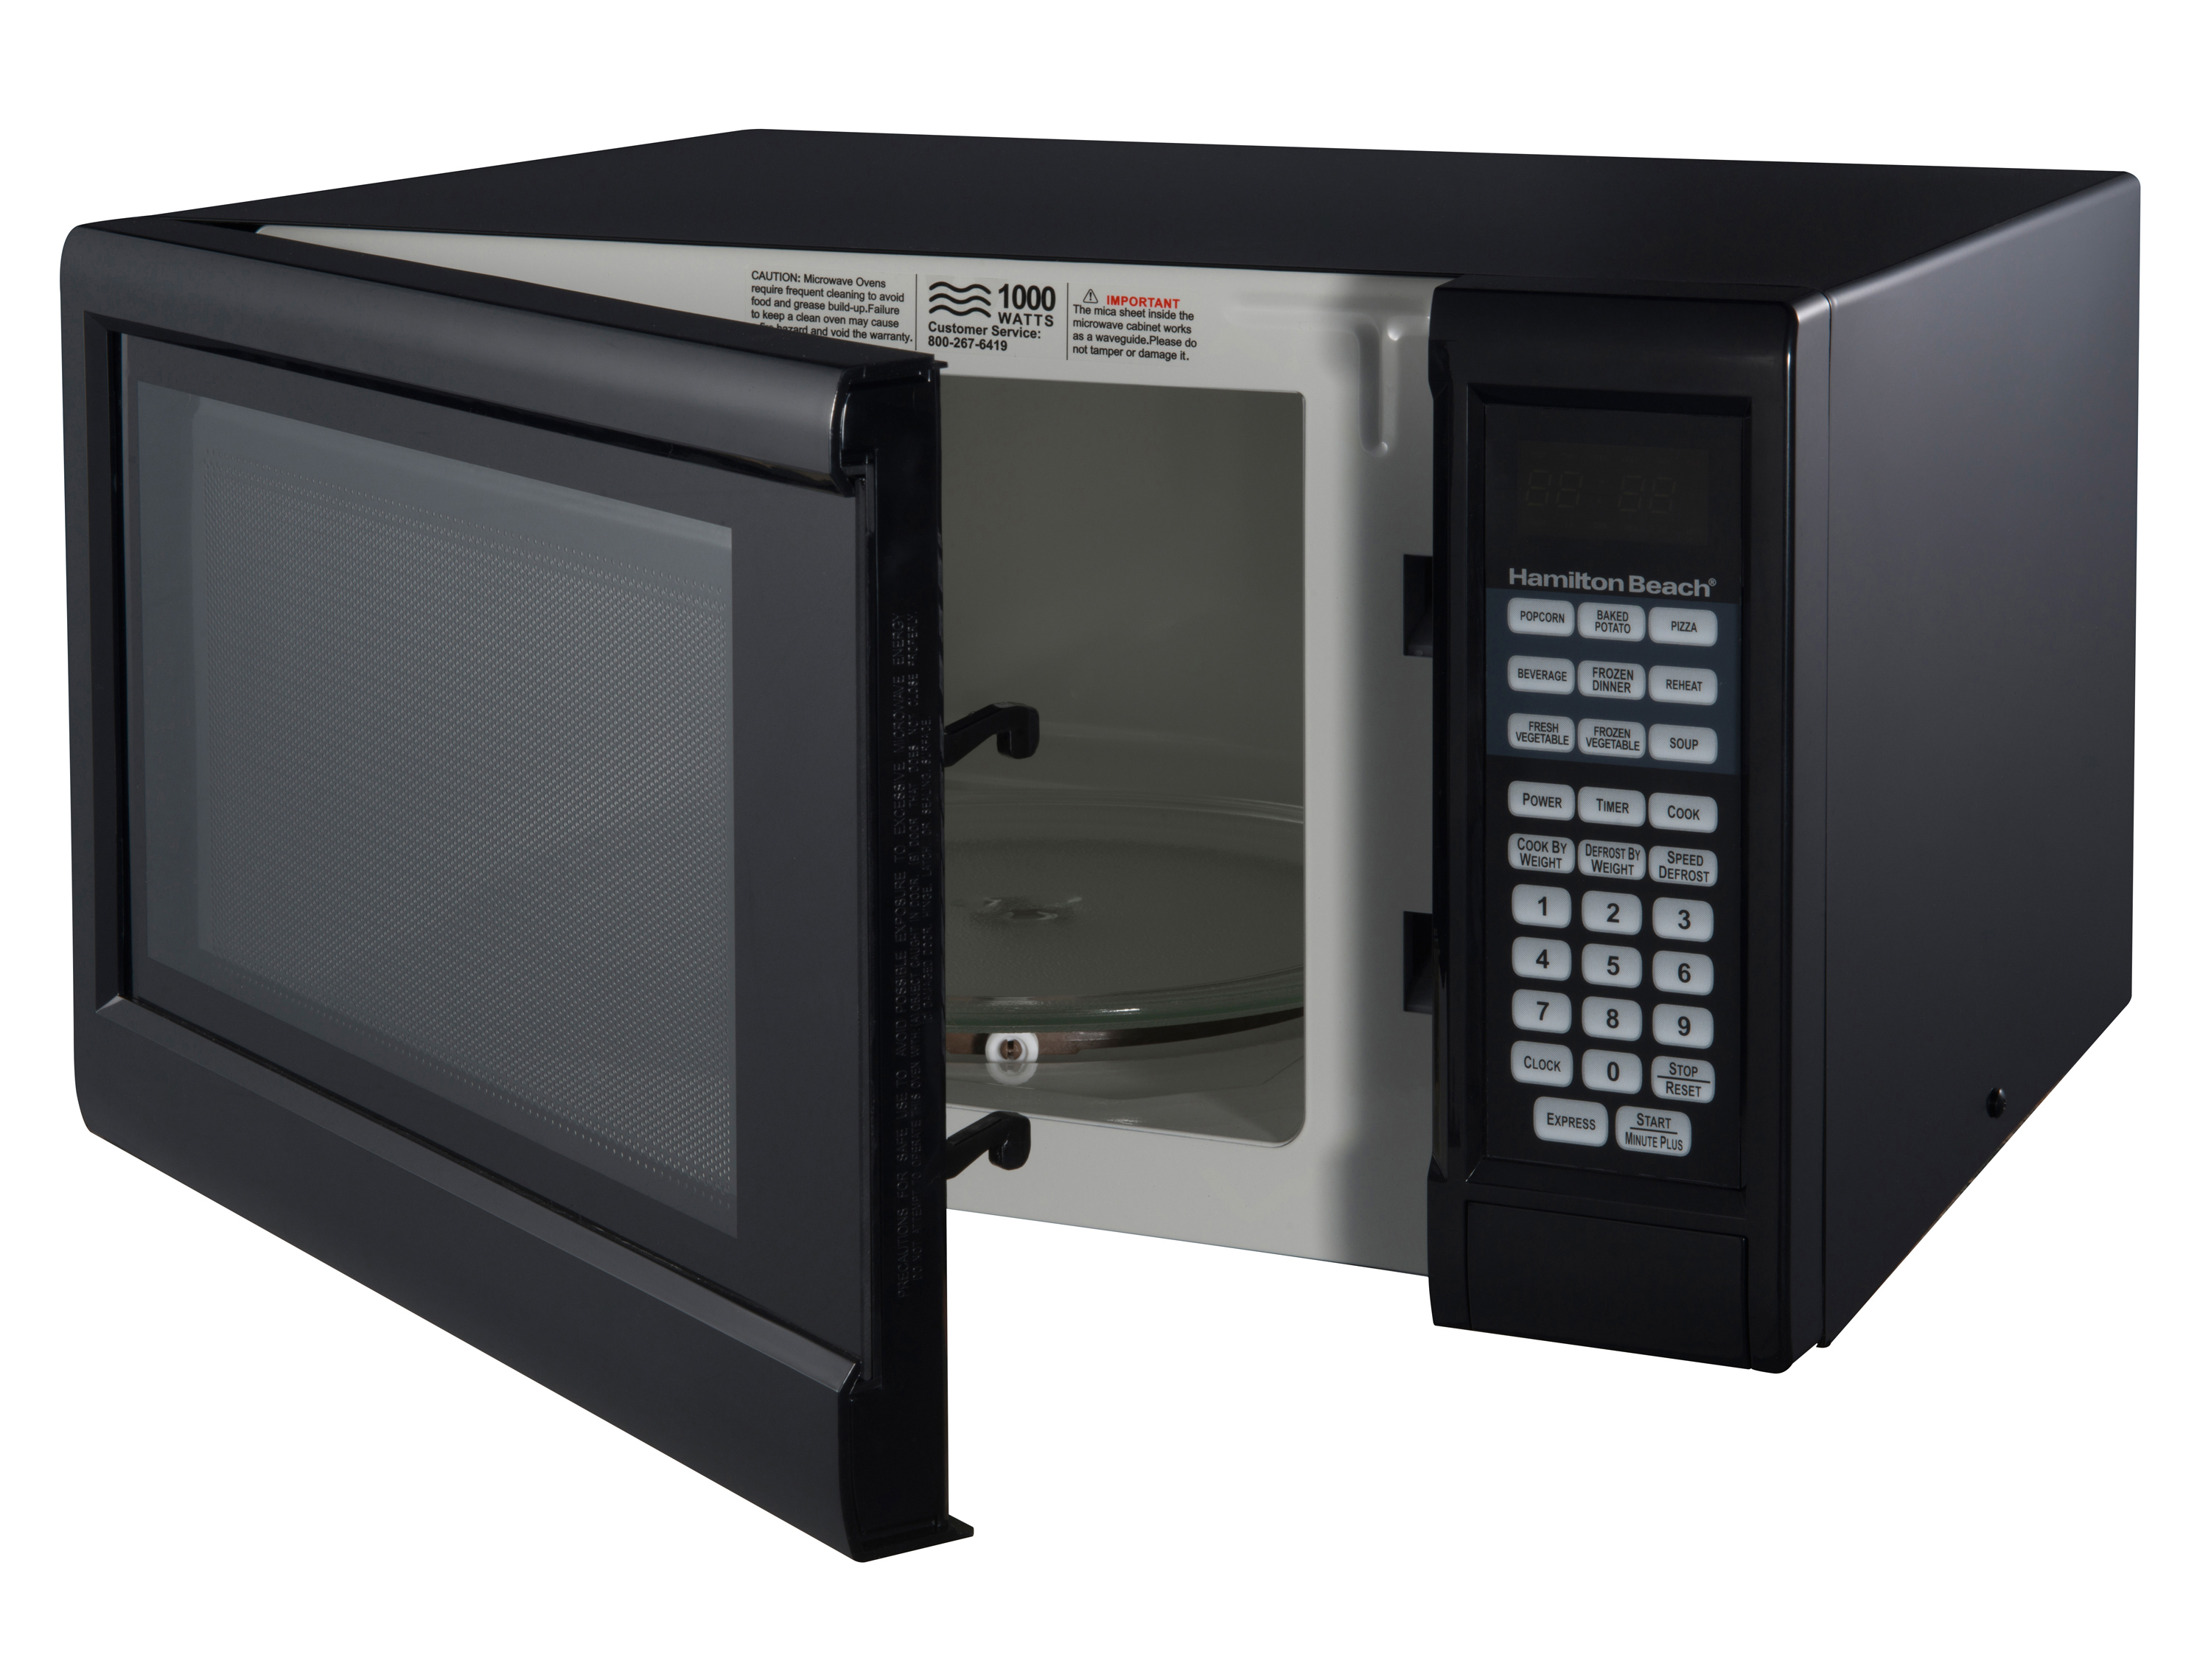 Hamilton Beach 1.3 Cu ft Digital Microwave Oven, Black - image 4 of 6